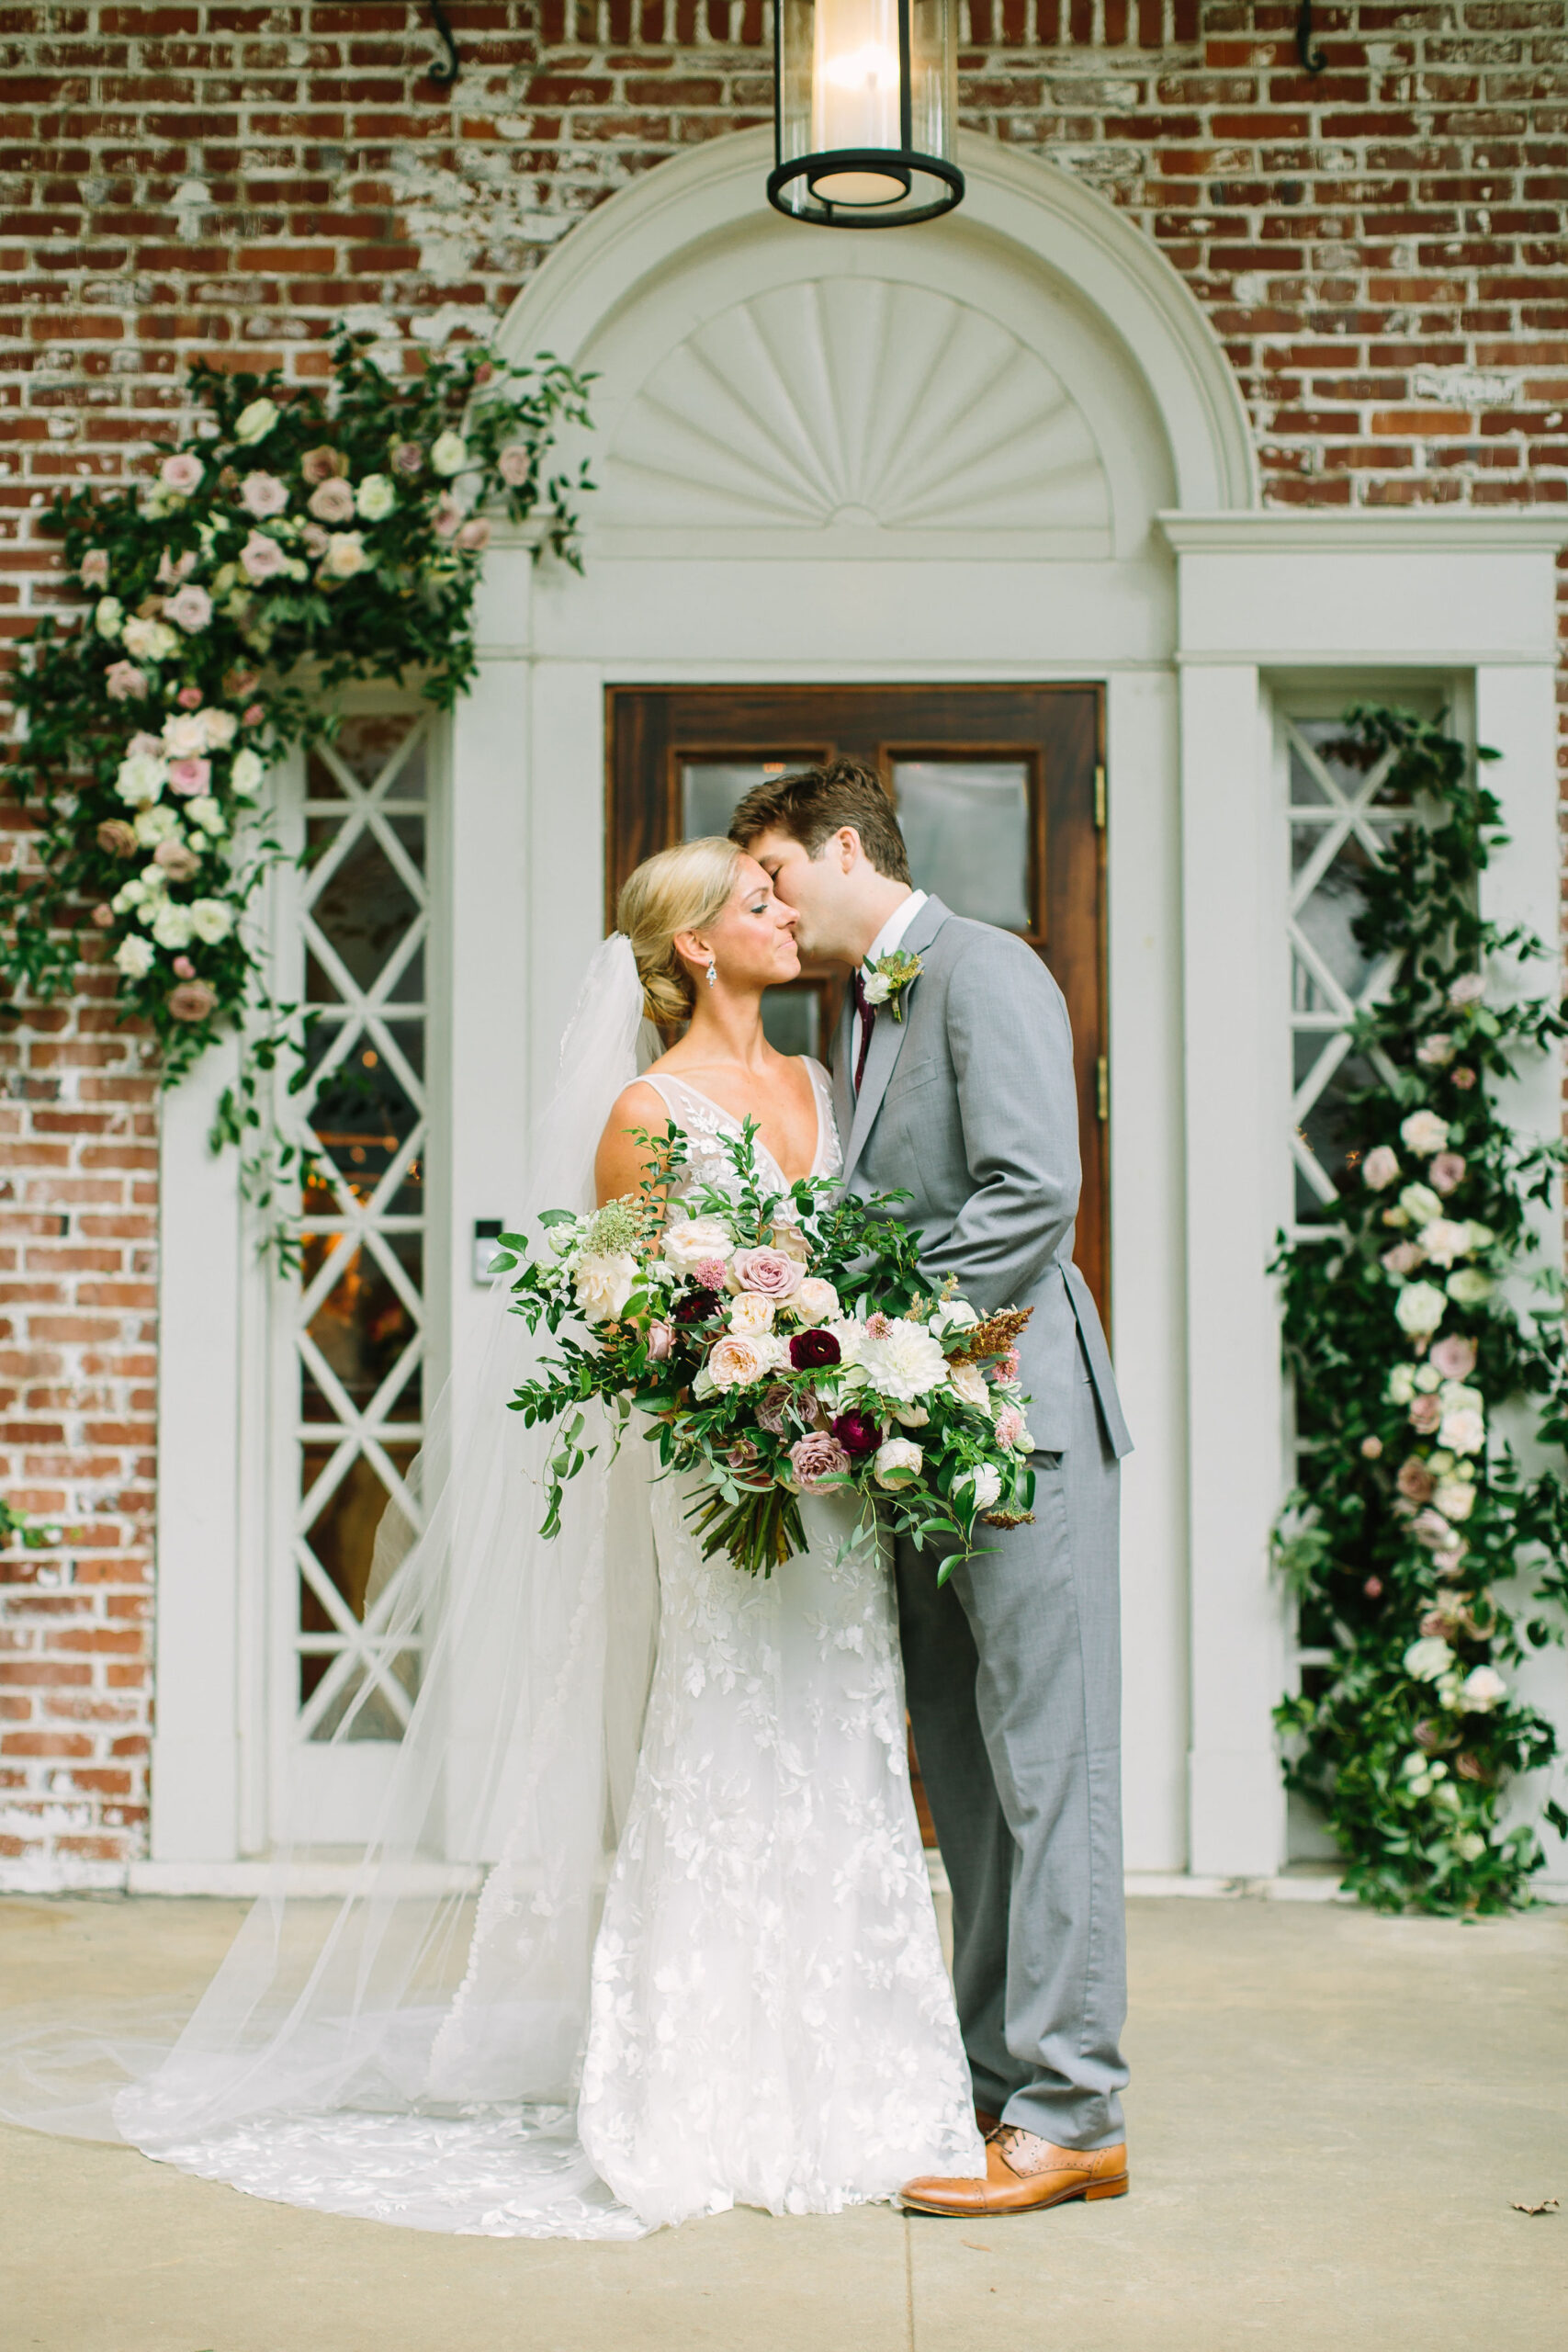 Leonard-208.jpgDusty rose, blush, and ivory bridal bouquet with lush greenery // Nashville Wedding Floral Design